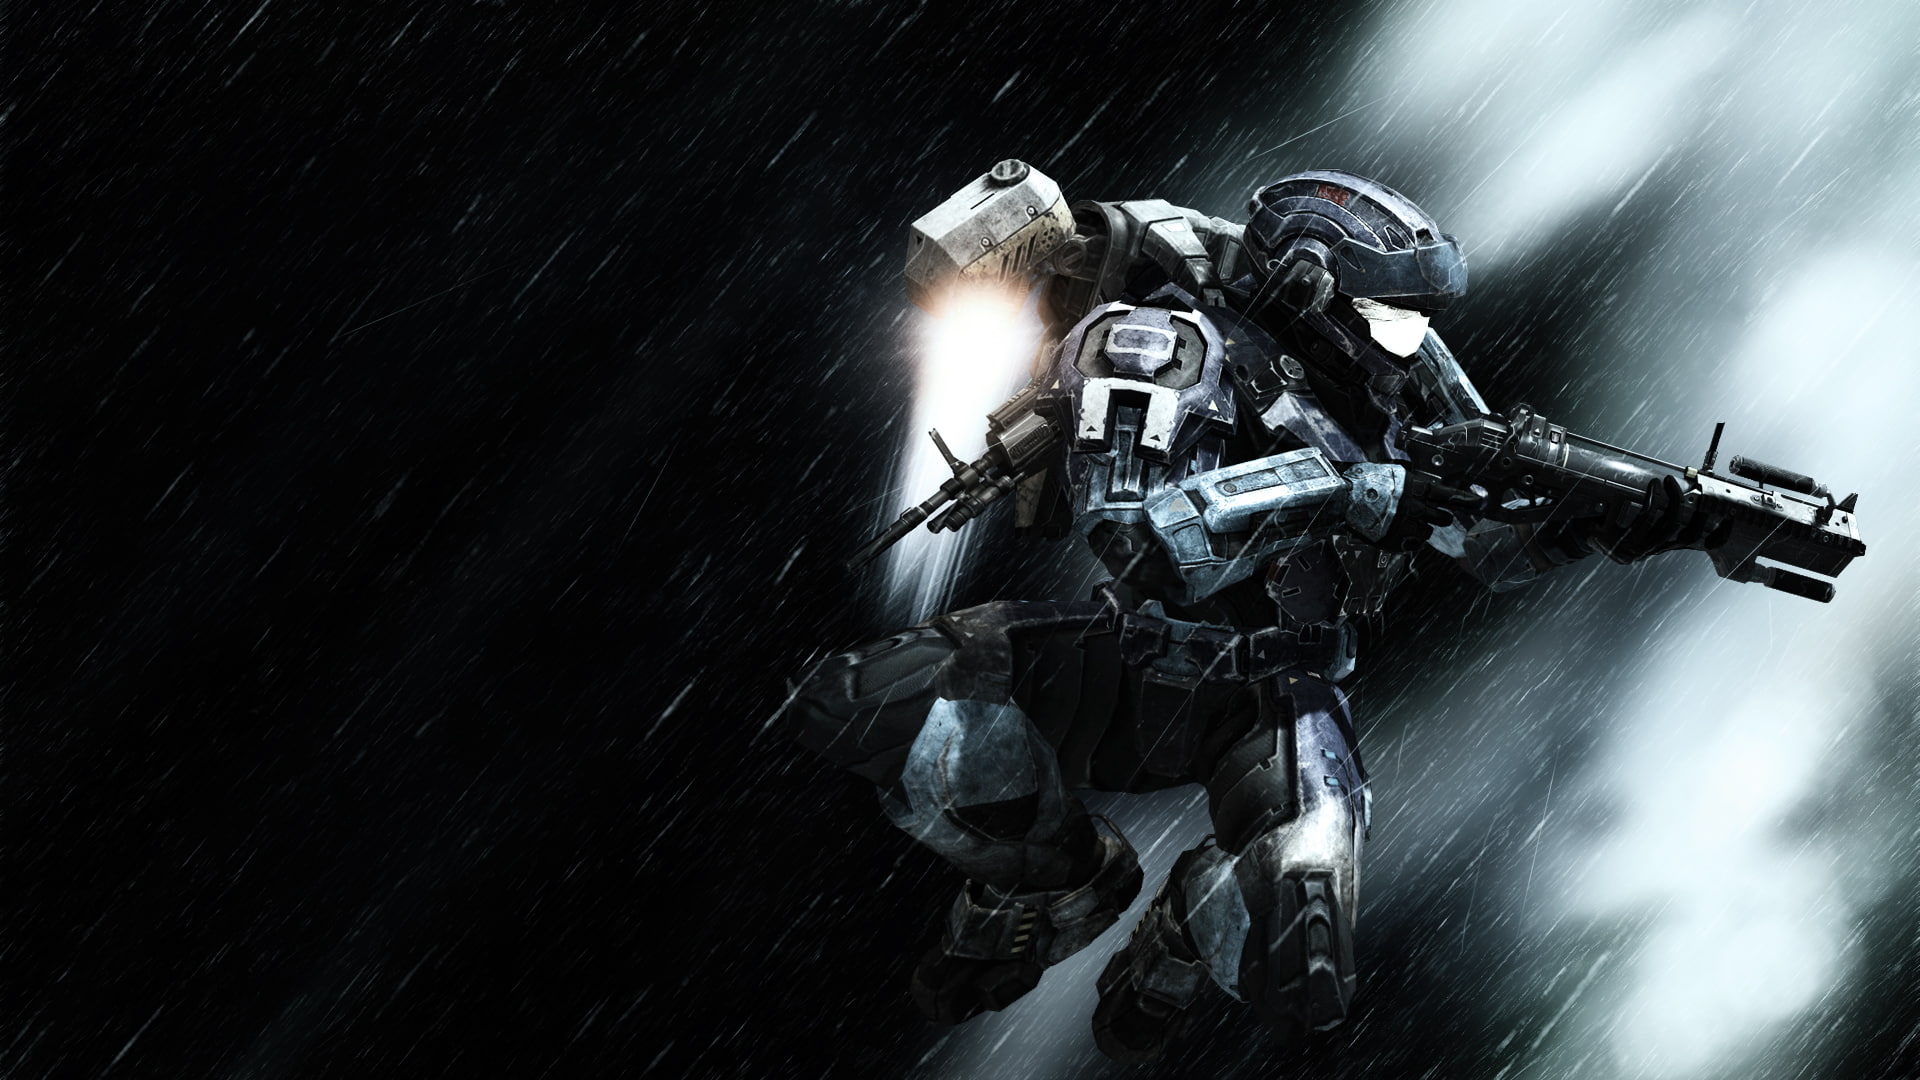 Halo, Video Games, Raining, Equipment, Armor, Helmet, robot character